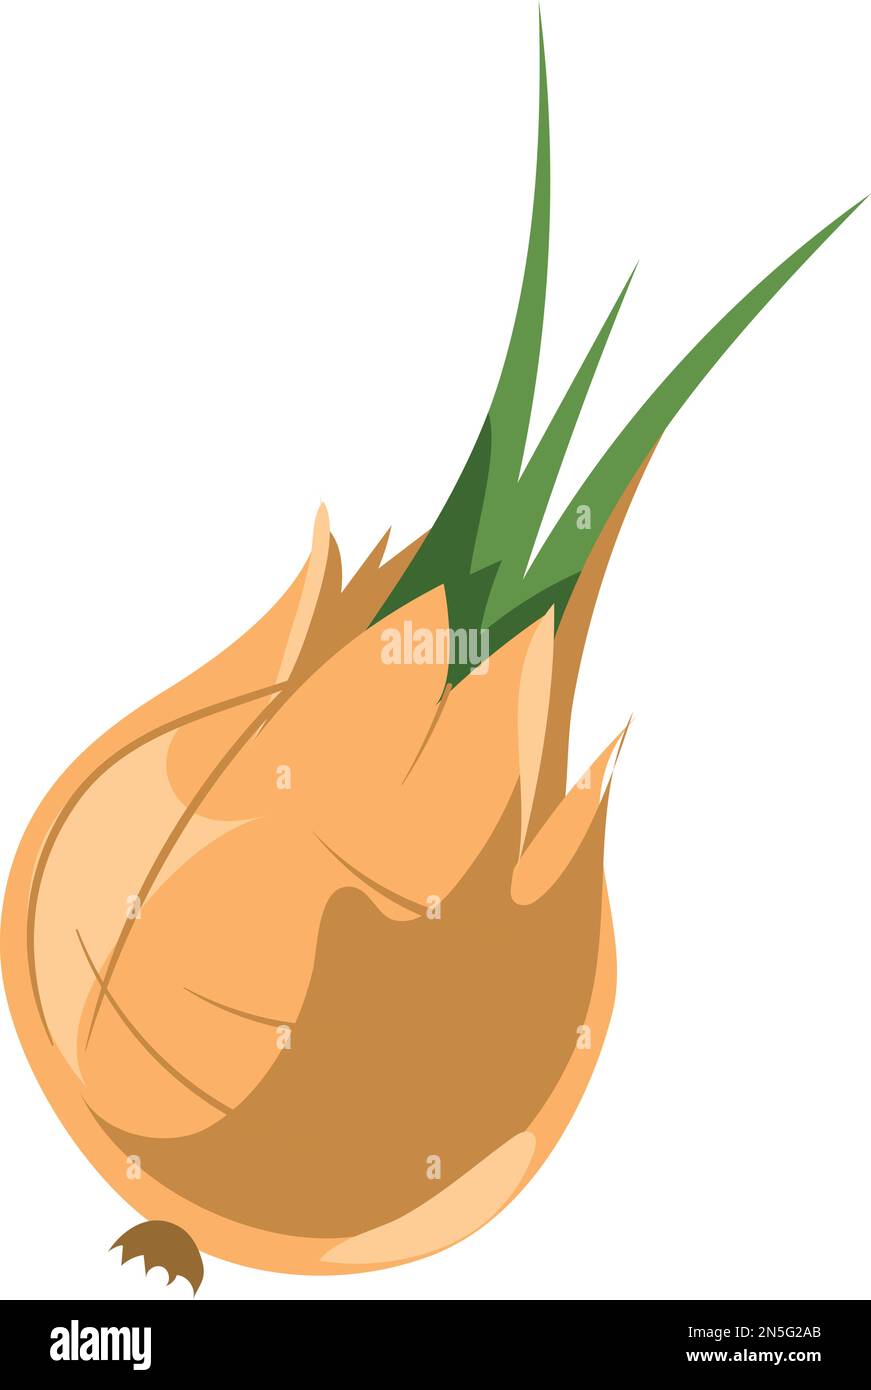 Onion bulb icon. Healthy natural fresh vegetable Stock Vector